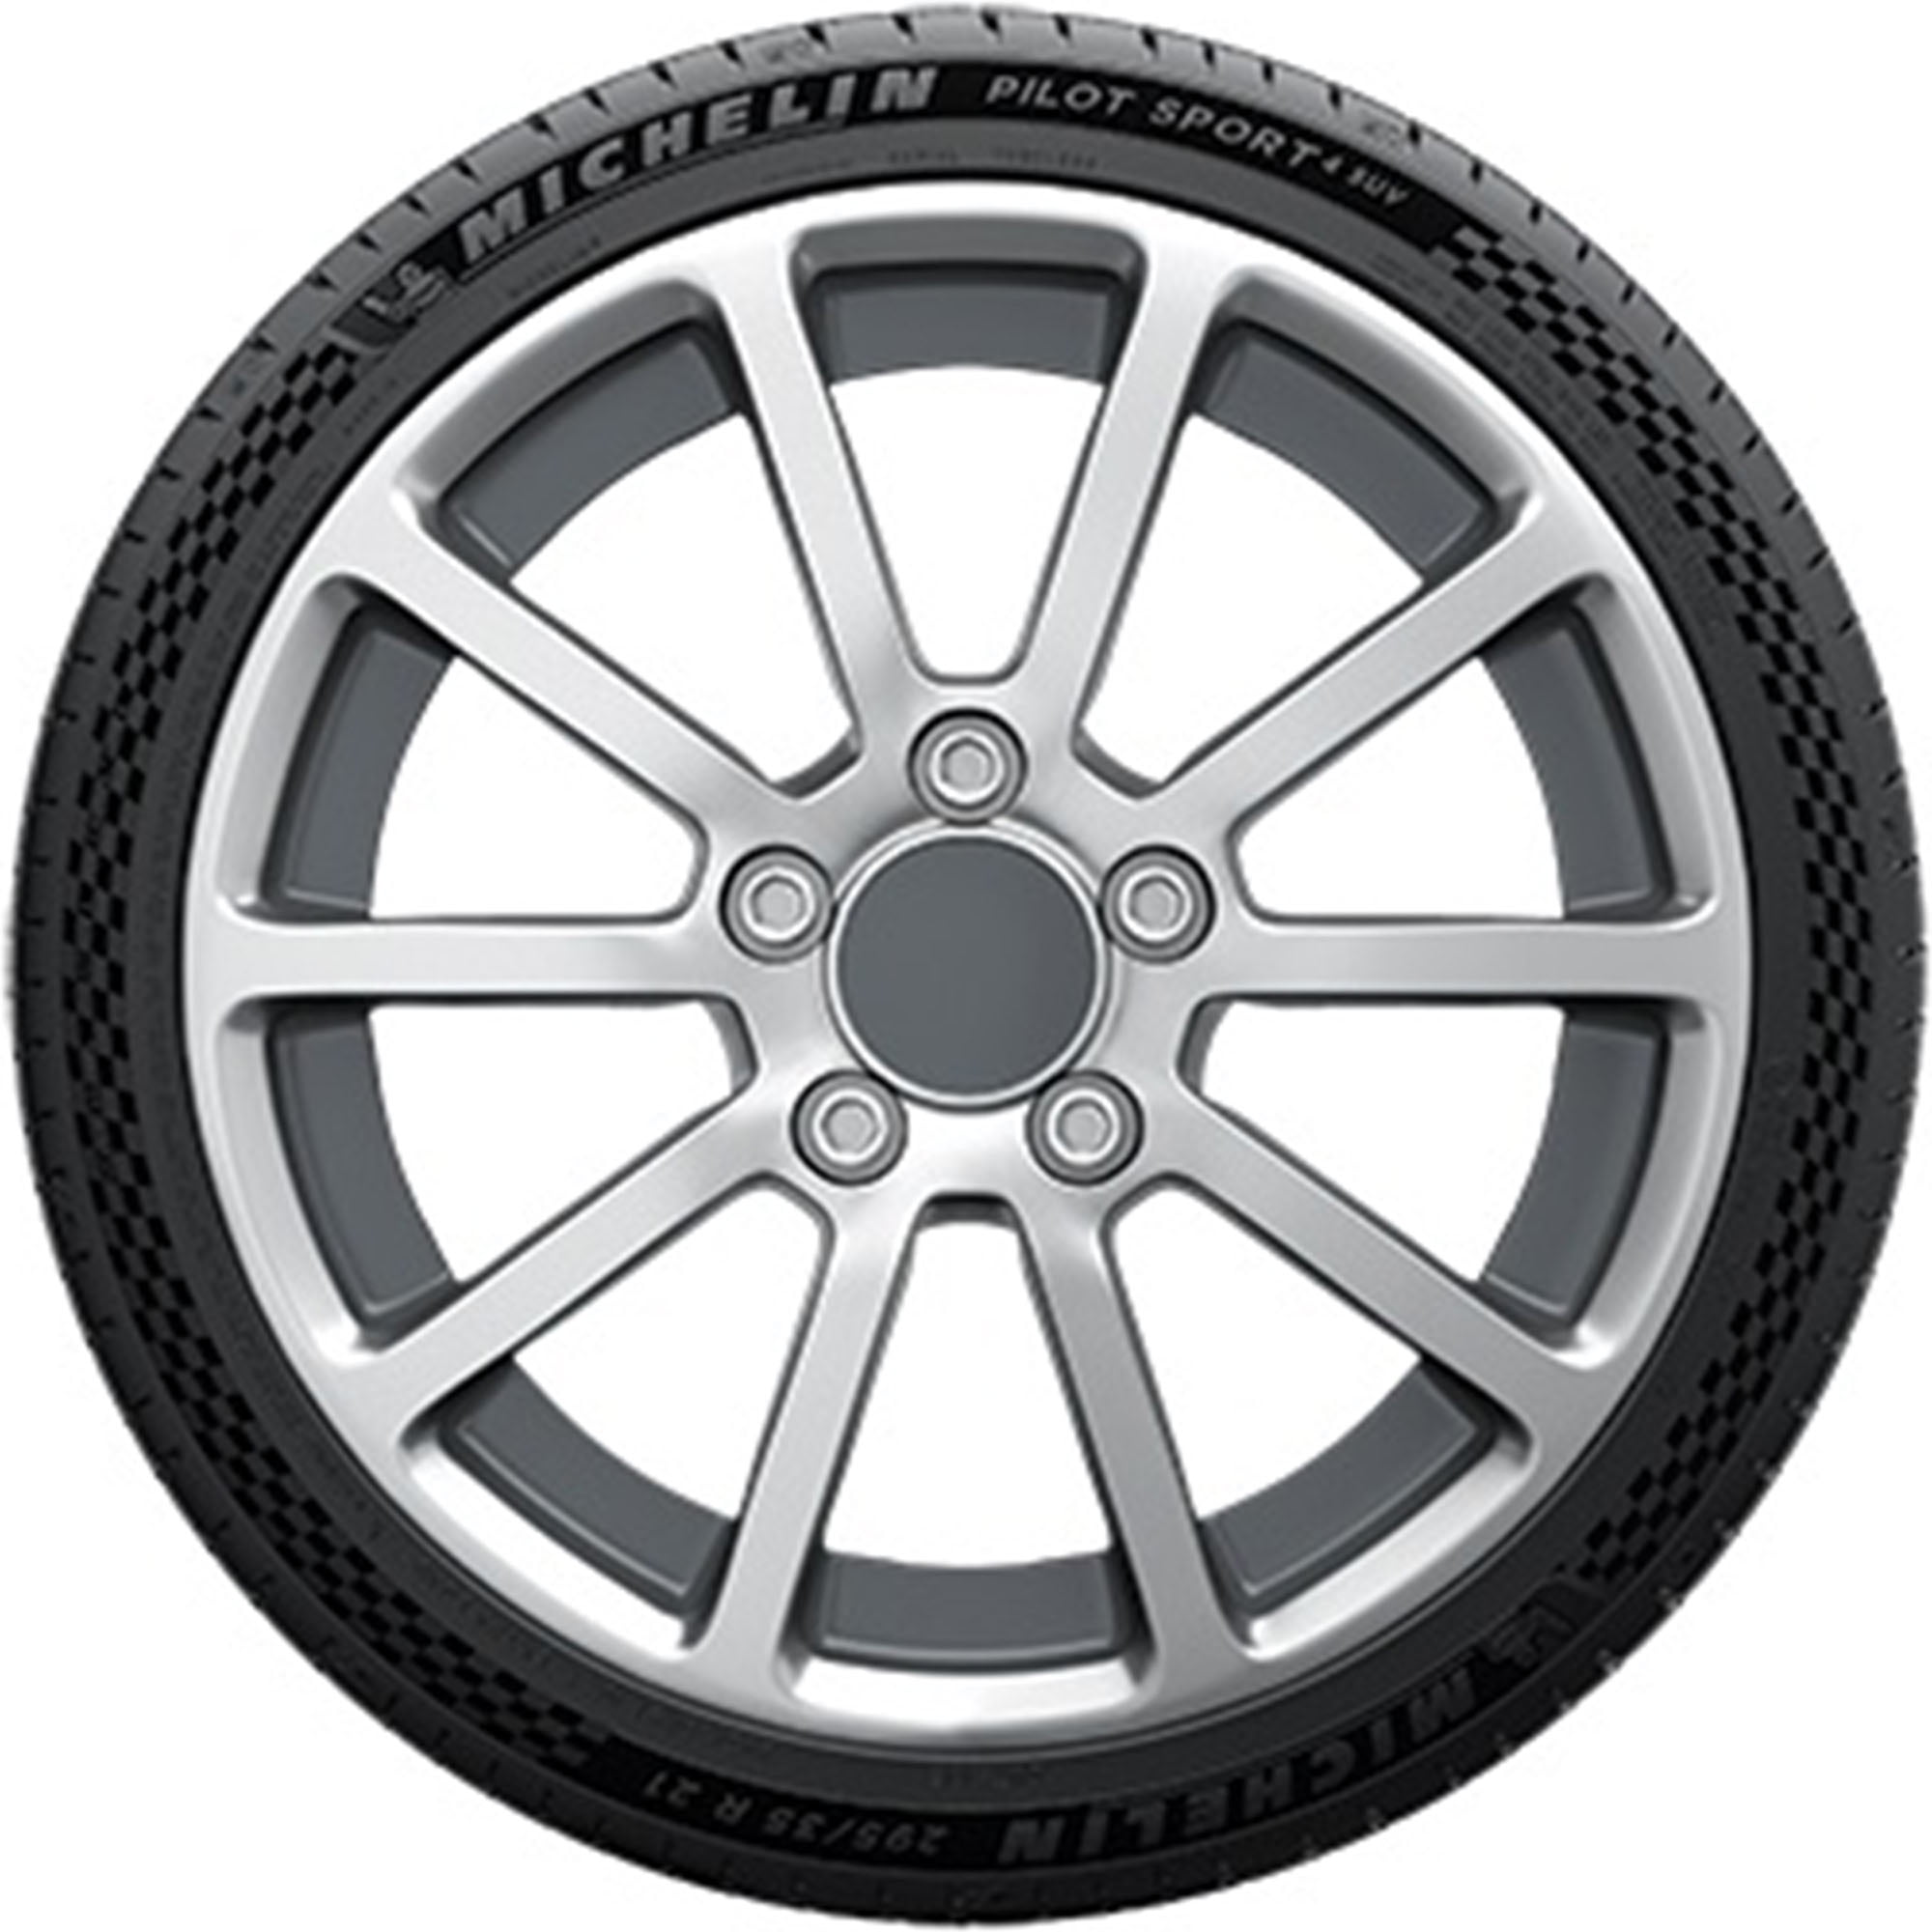 275/50R21 Summer XL 113V Michelin 4 Passenger Pilot Sport SUV Tire